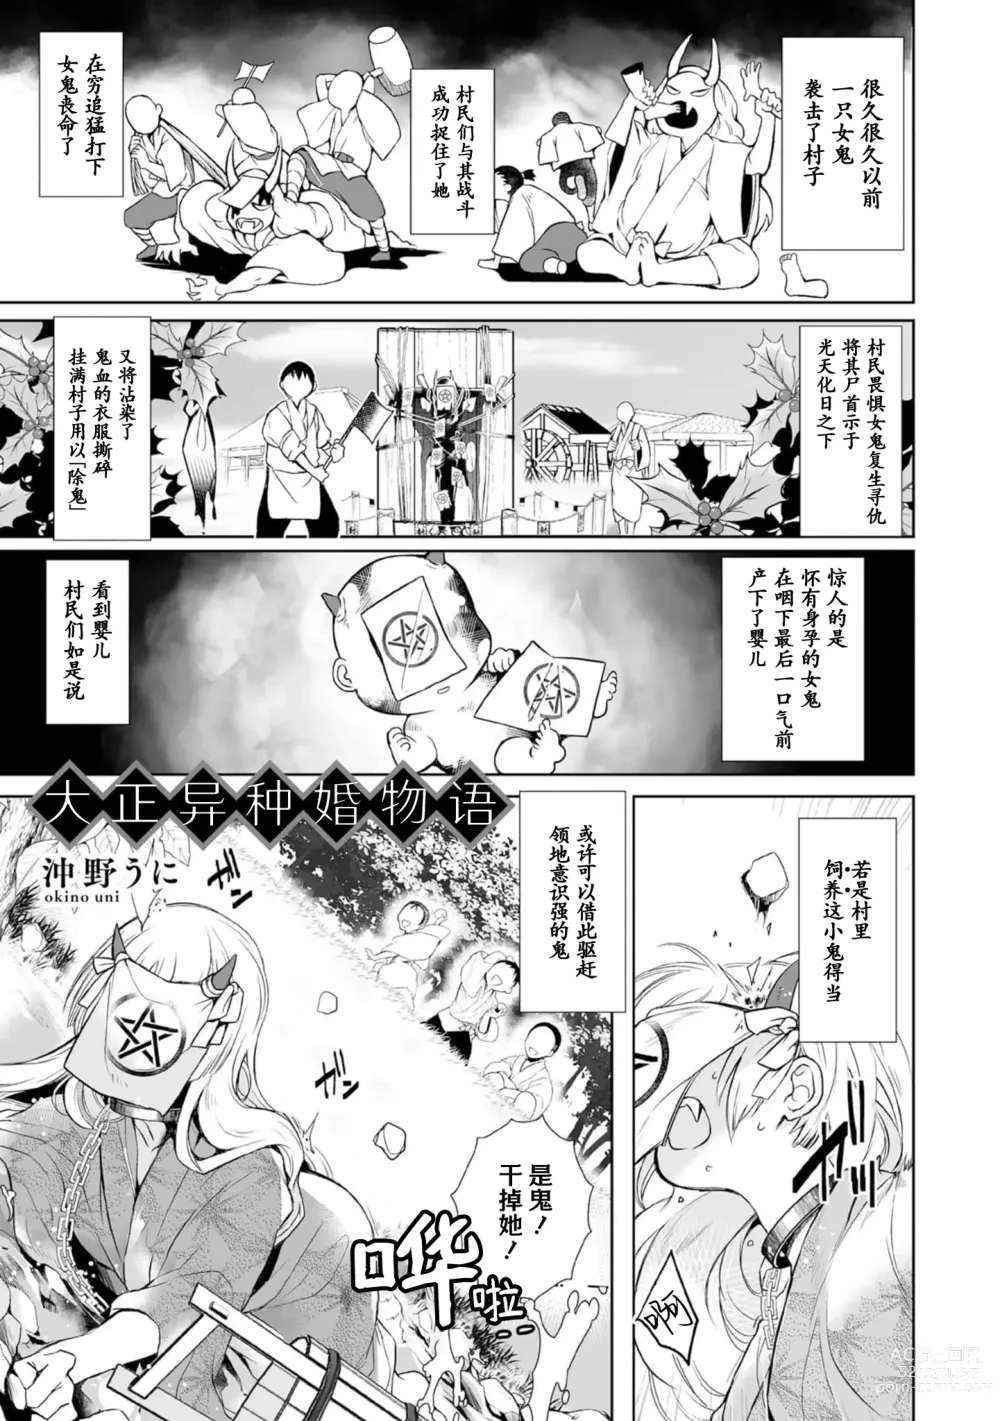 Page 3 of manga 大正异种婚物语